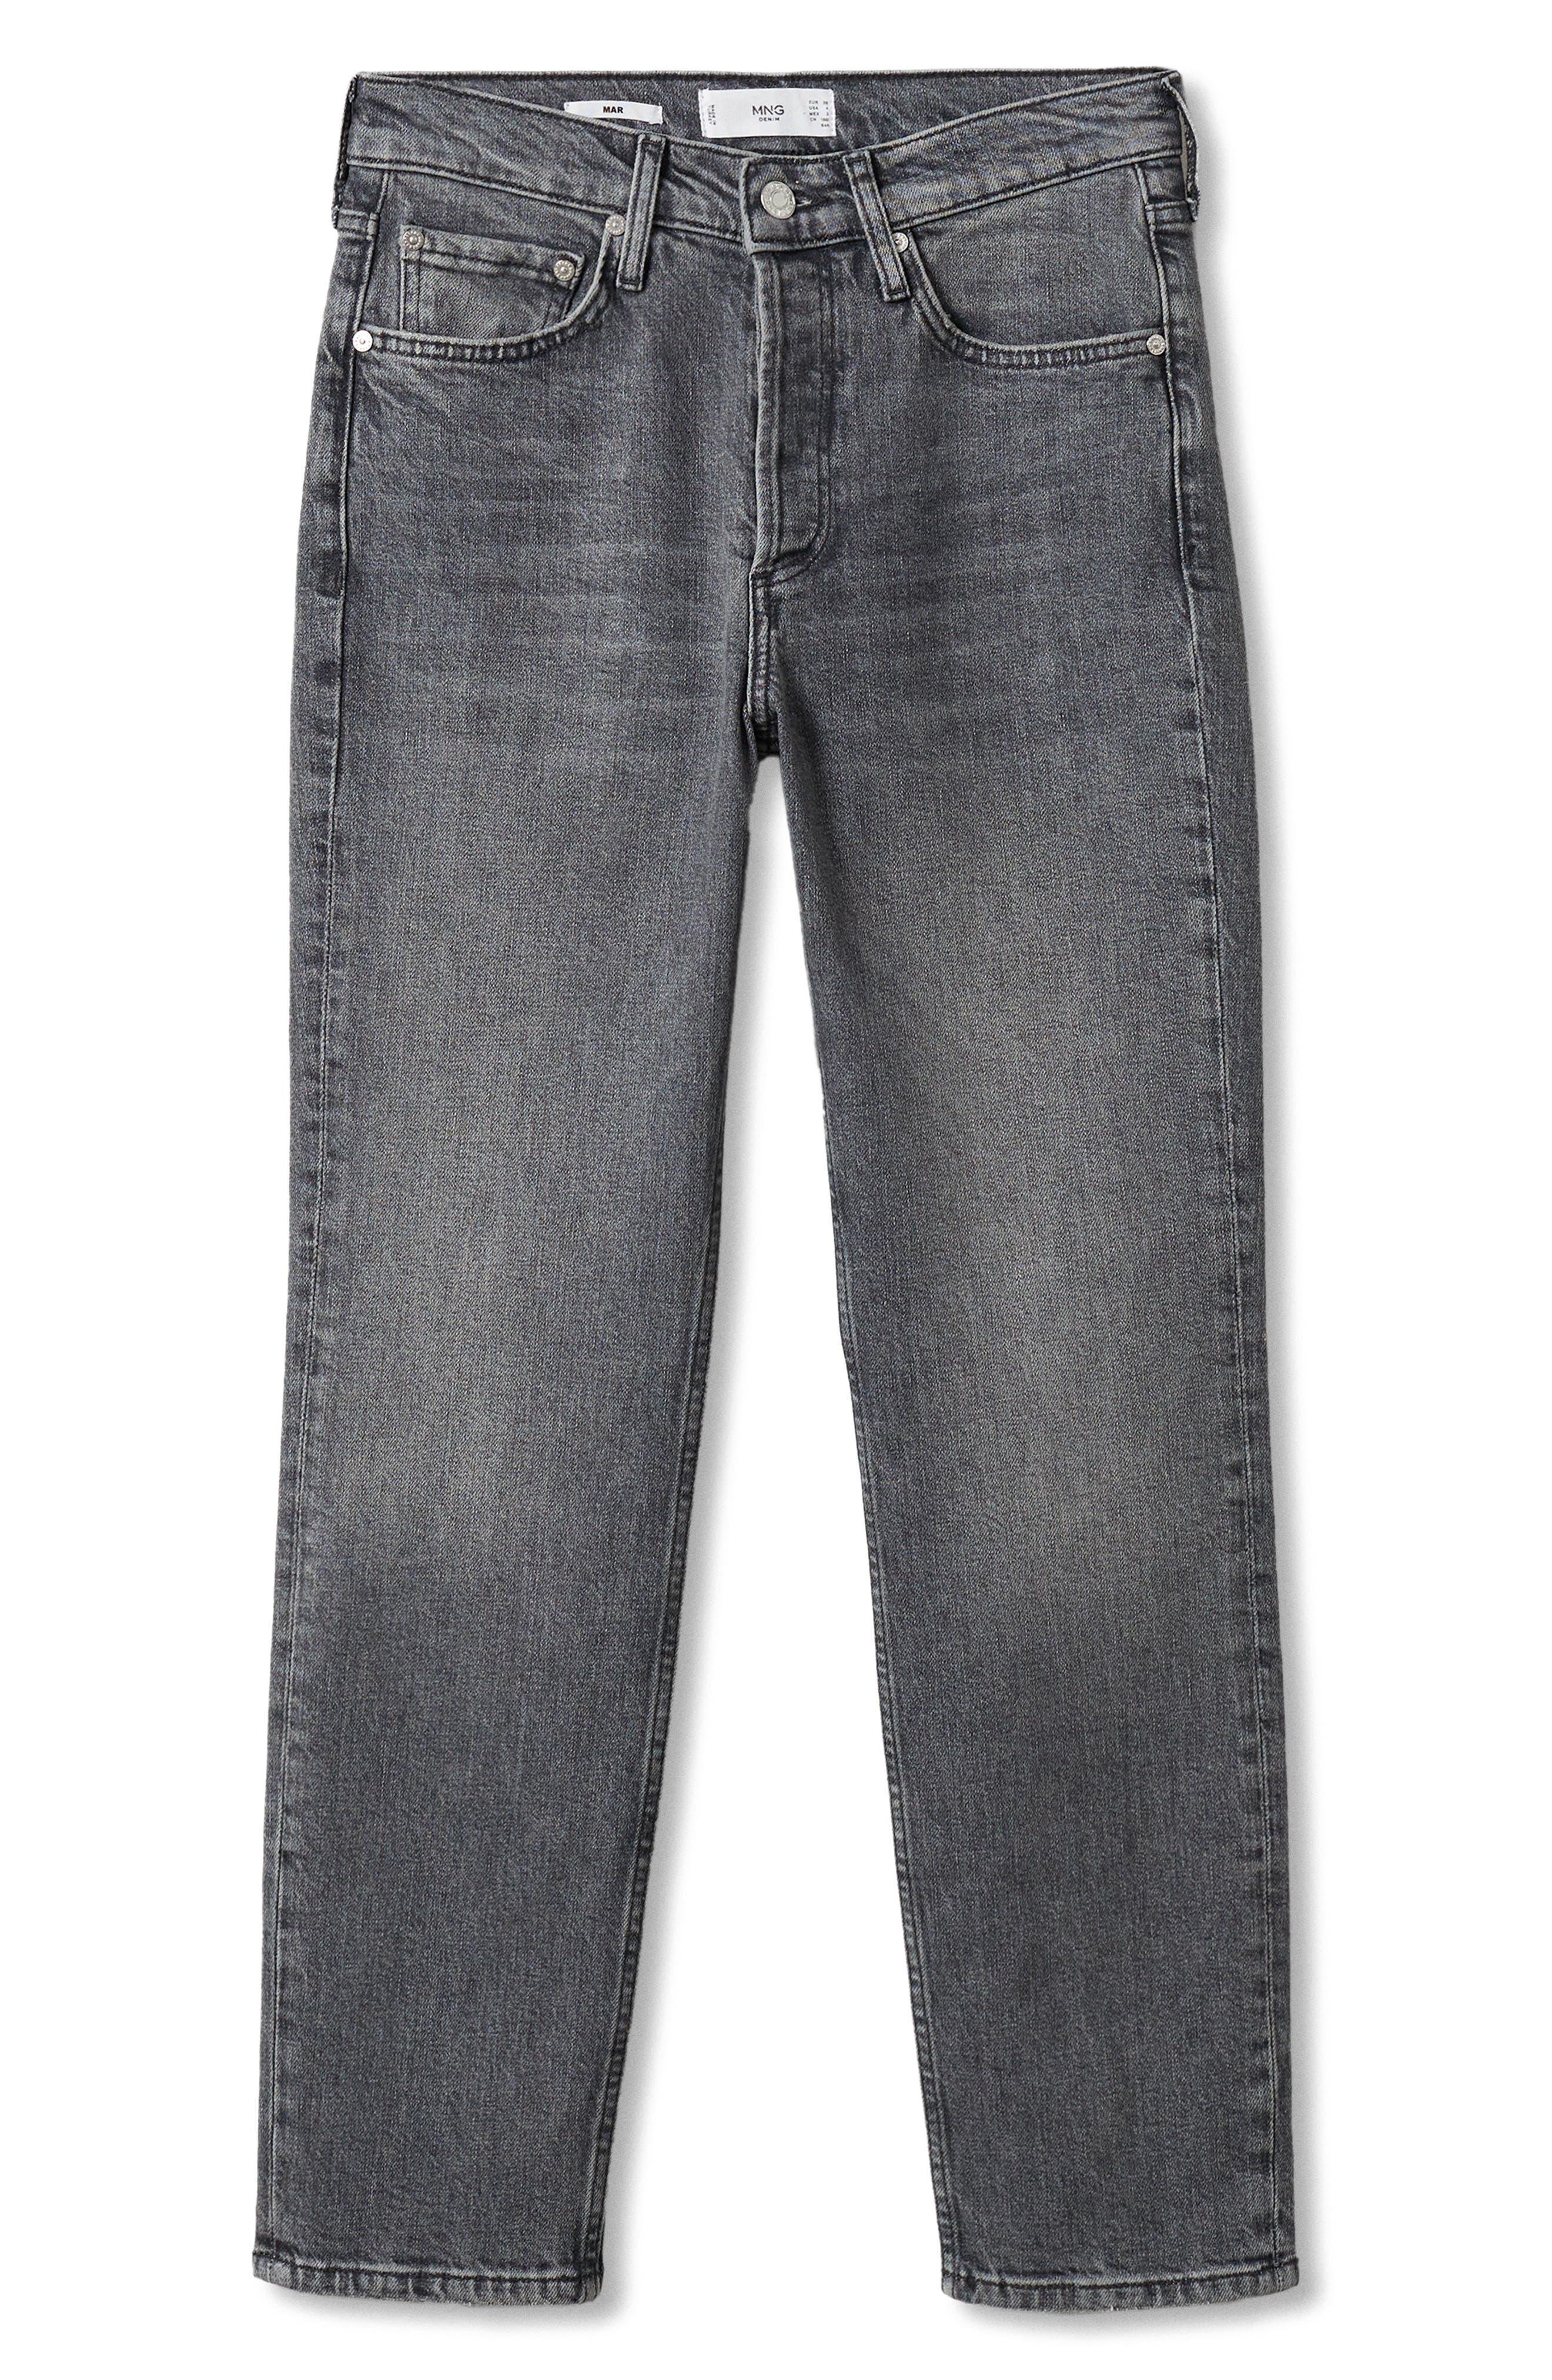 Mango Crop Slim Fit Jeans In Denim Grey At Nordstrom Rack in Gray | Lyst